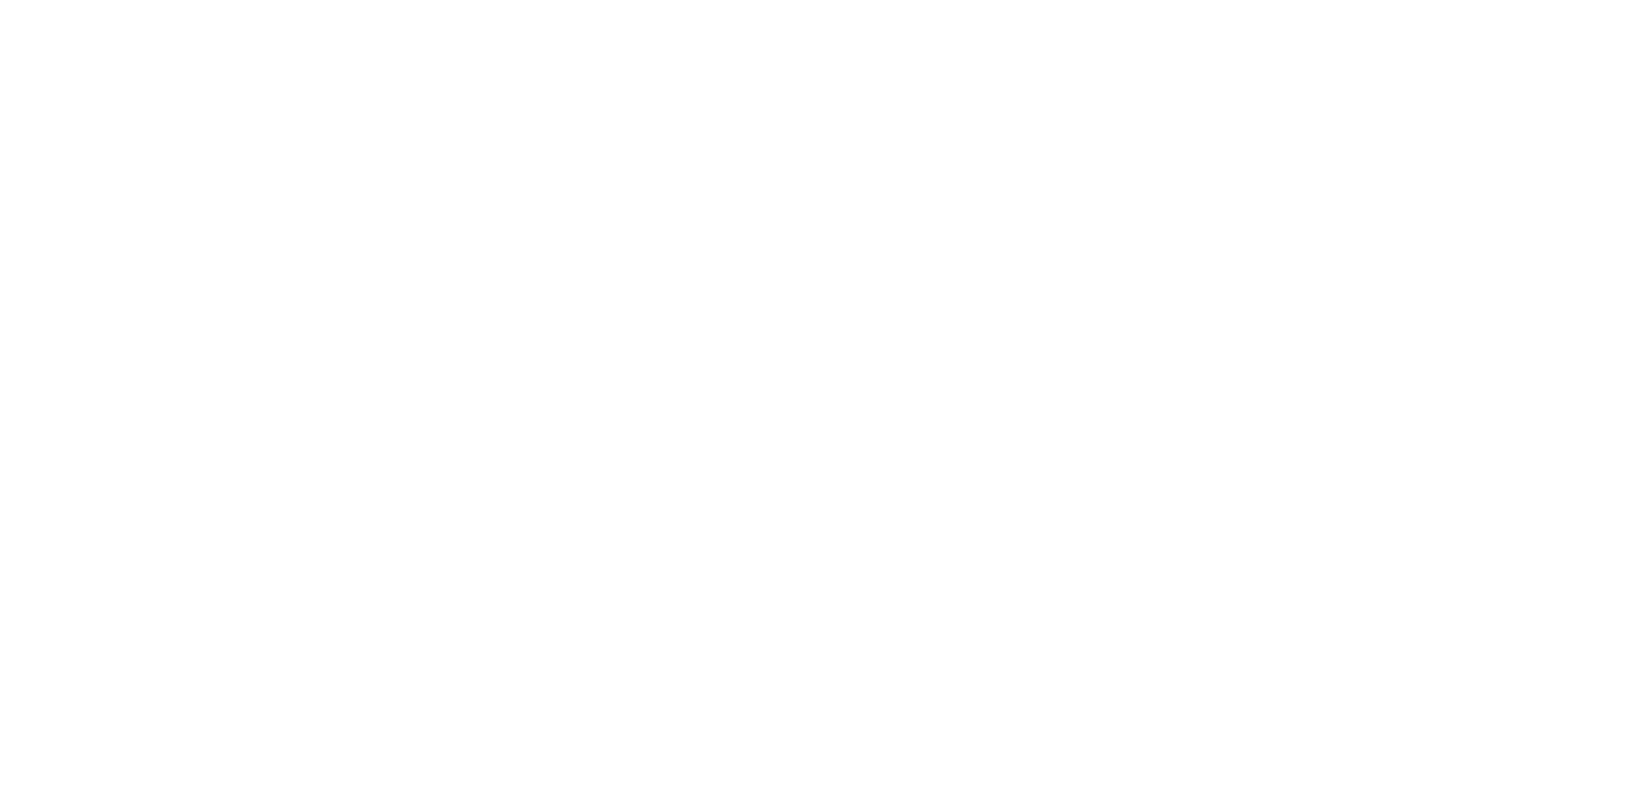 Norma Group logo large for dark backgrounds (transparent PNG)